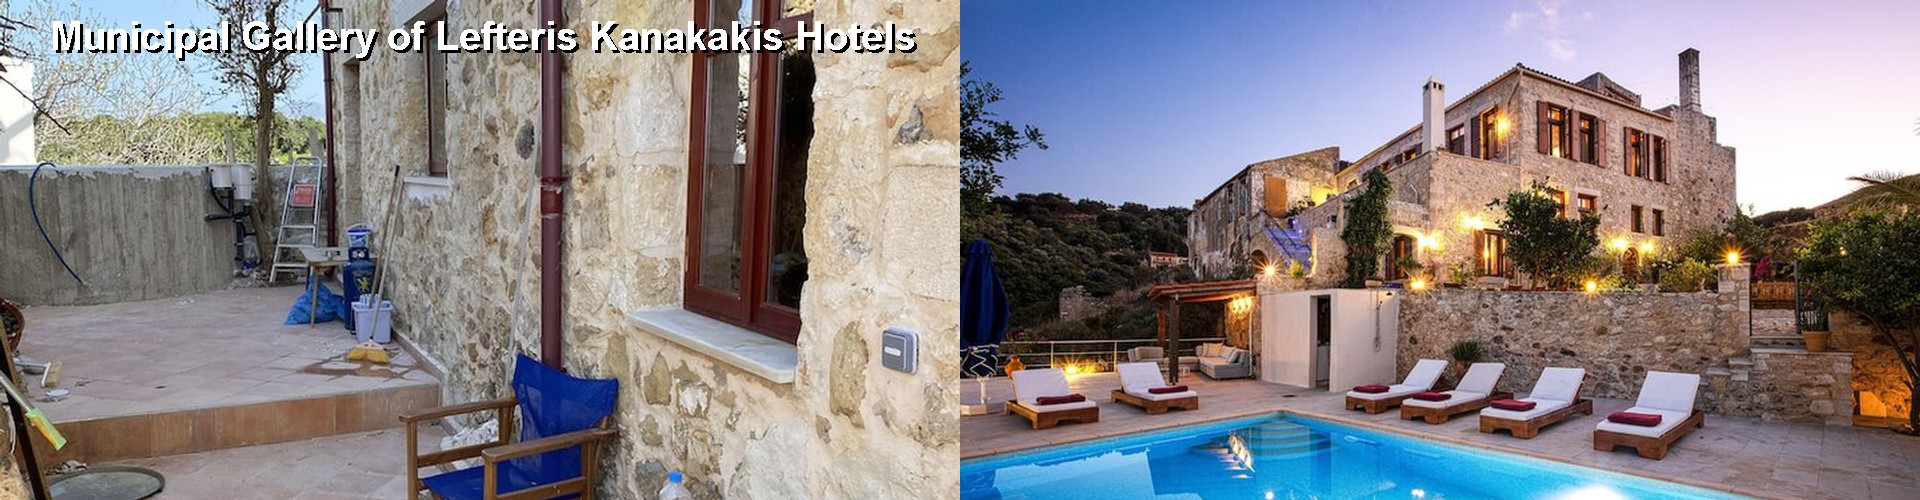 5 Best Hotels near Municipal Gallery of Lefteris Kanakakis